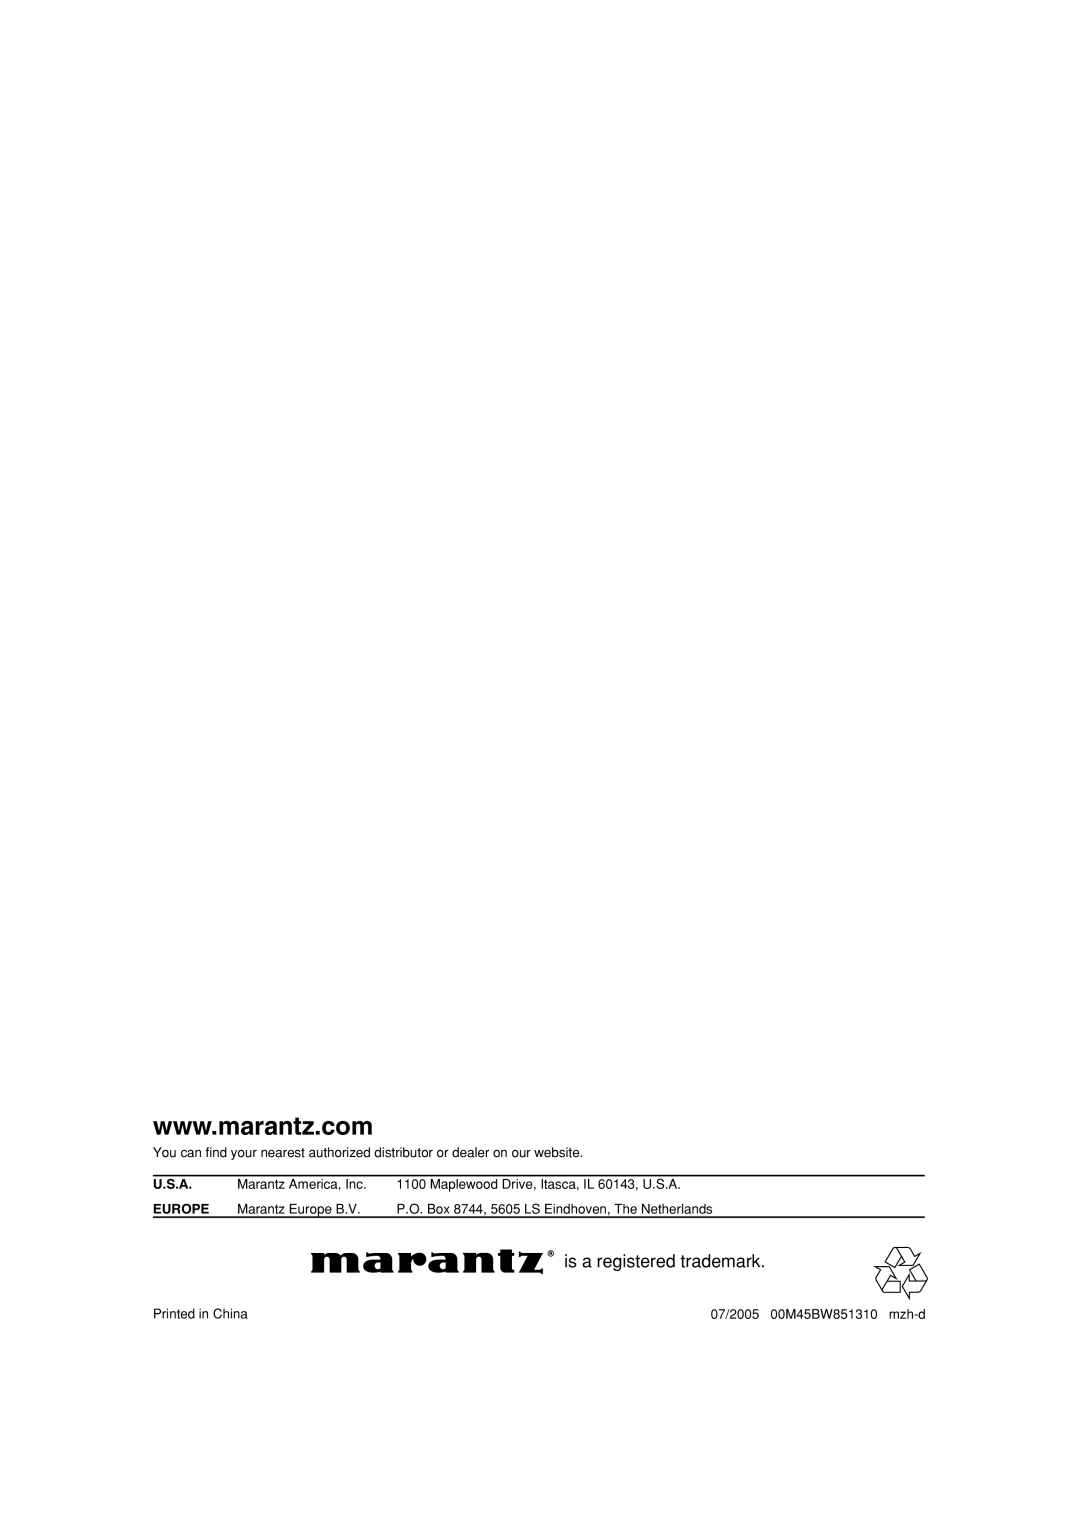 Marantz CD5001OSE manual is a registered trademark, U.S.A, Europe 